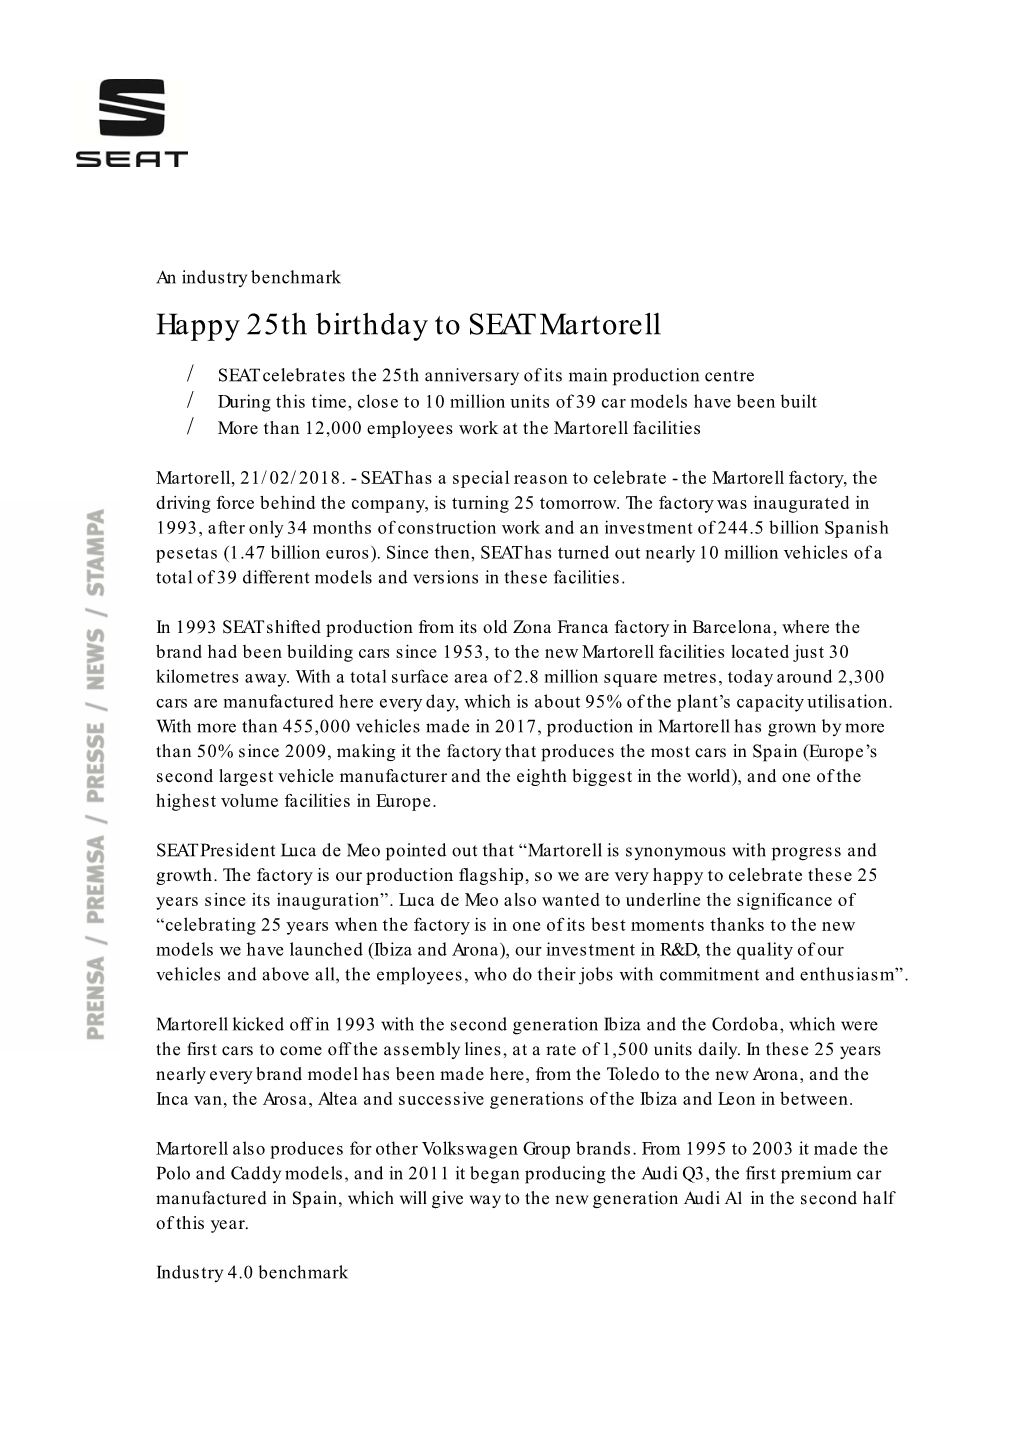 Happy 25Th Birthday to SEAT Martorell